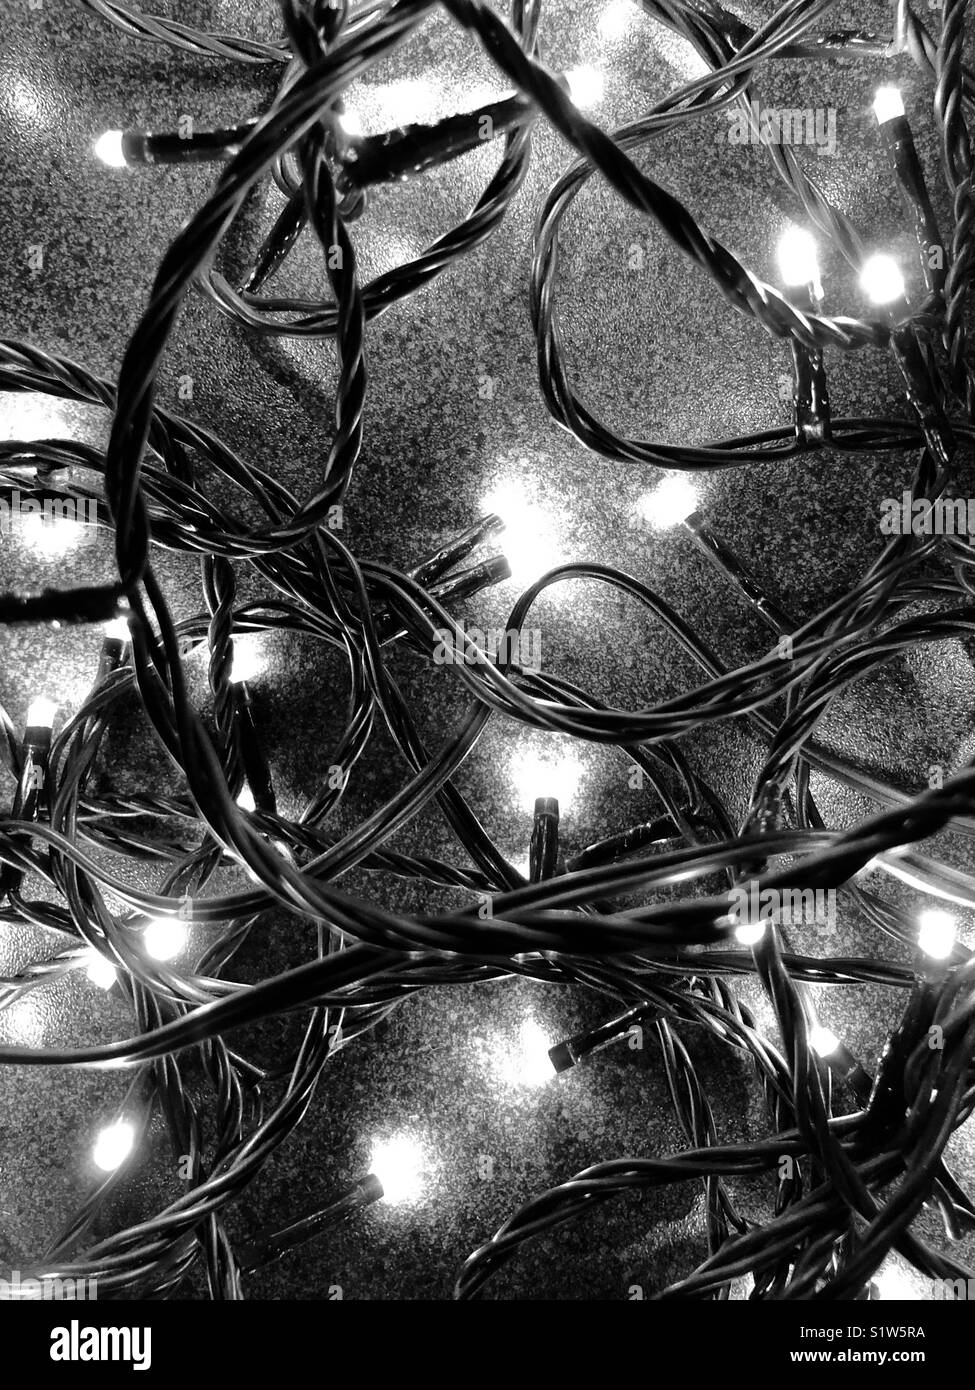 Weihnachtsbeleuchtung Stockfoto